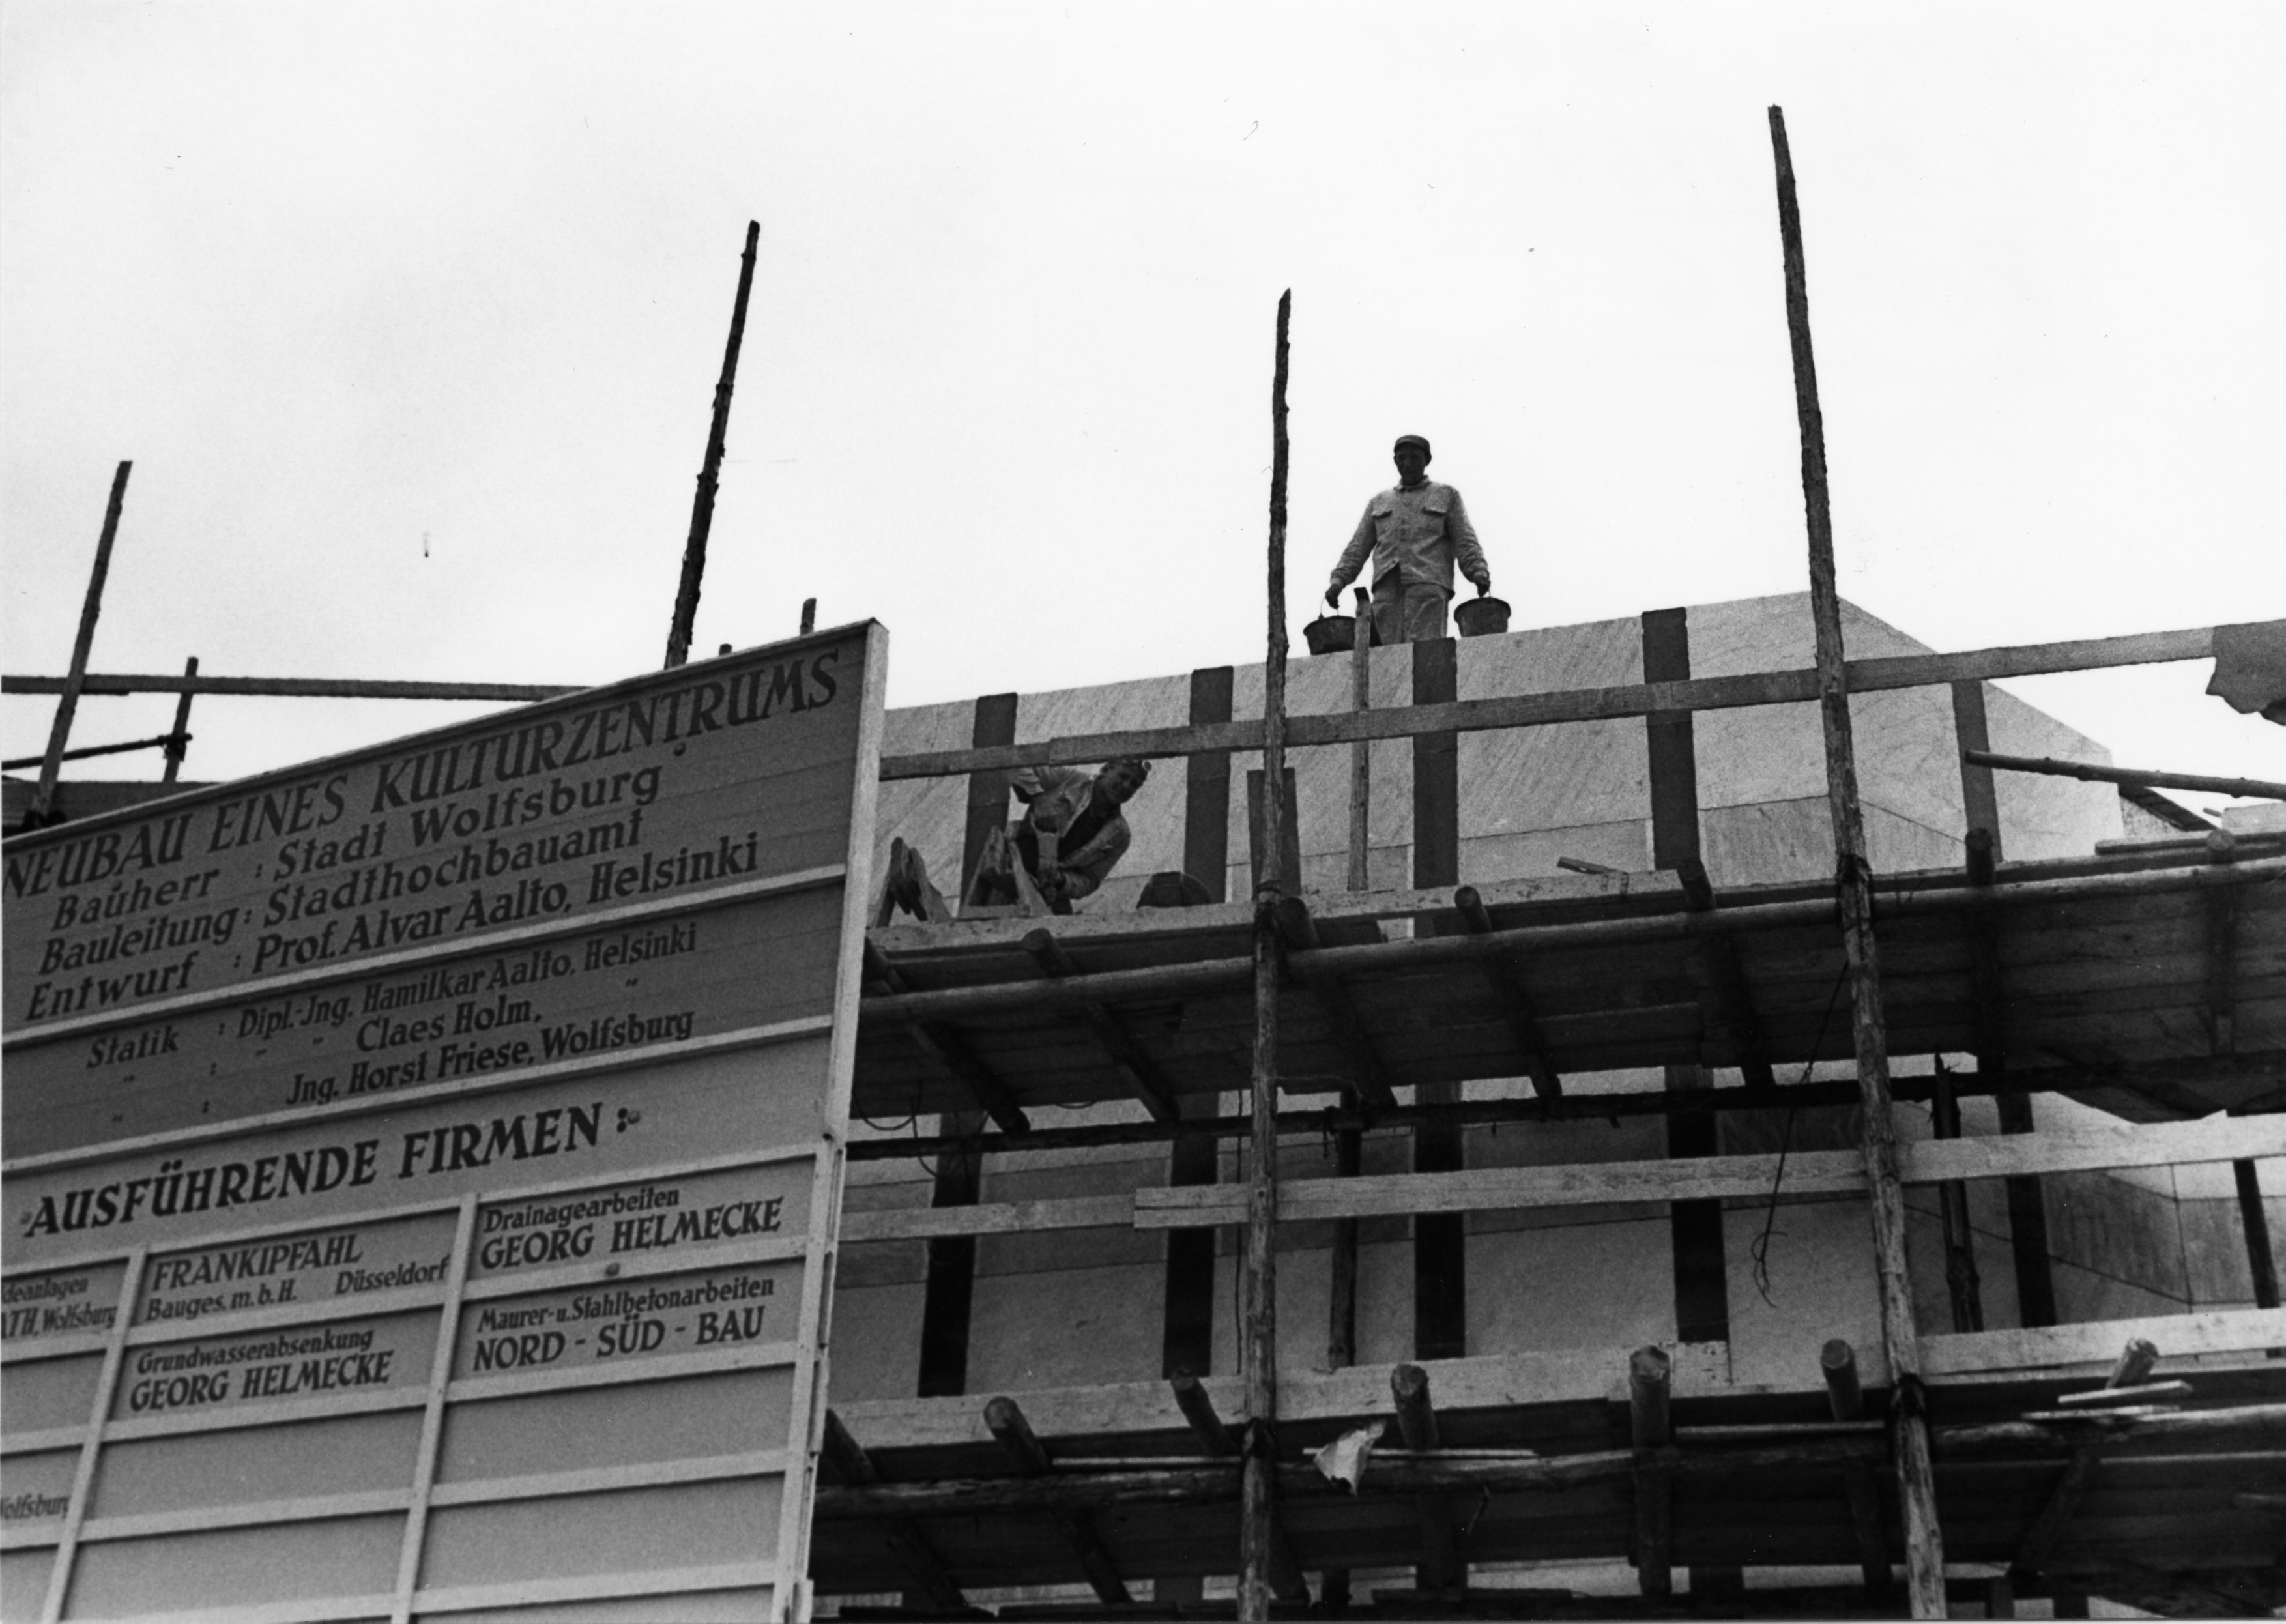 Bau des Kulturzentrums, Juni 1961 (Foto: Rosemarie Rohde)